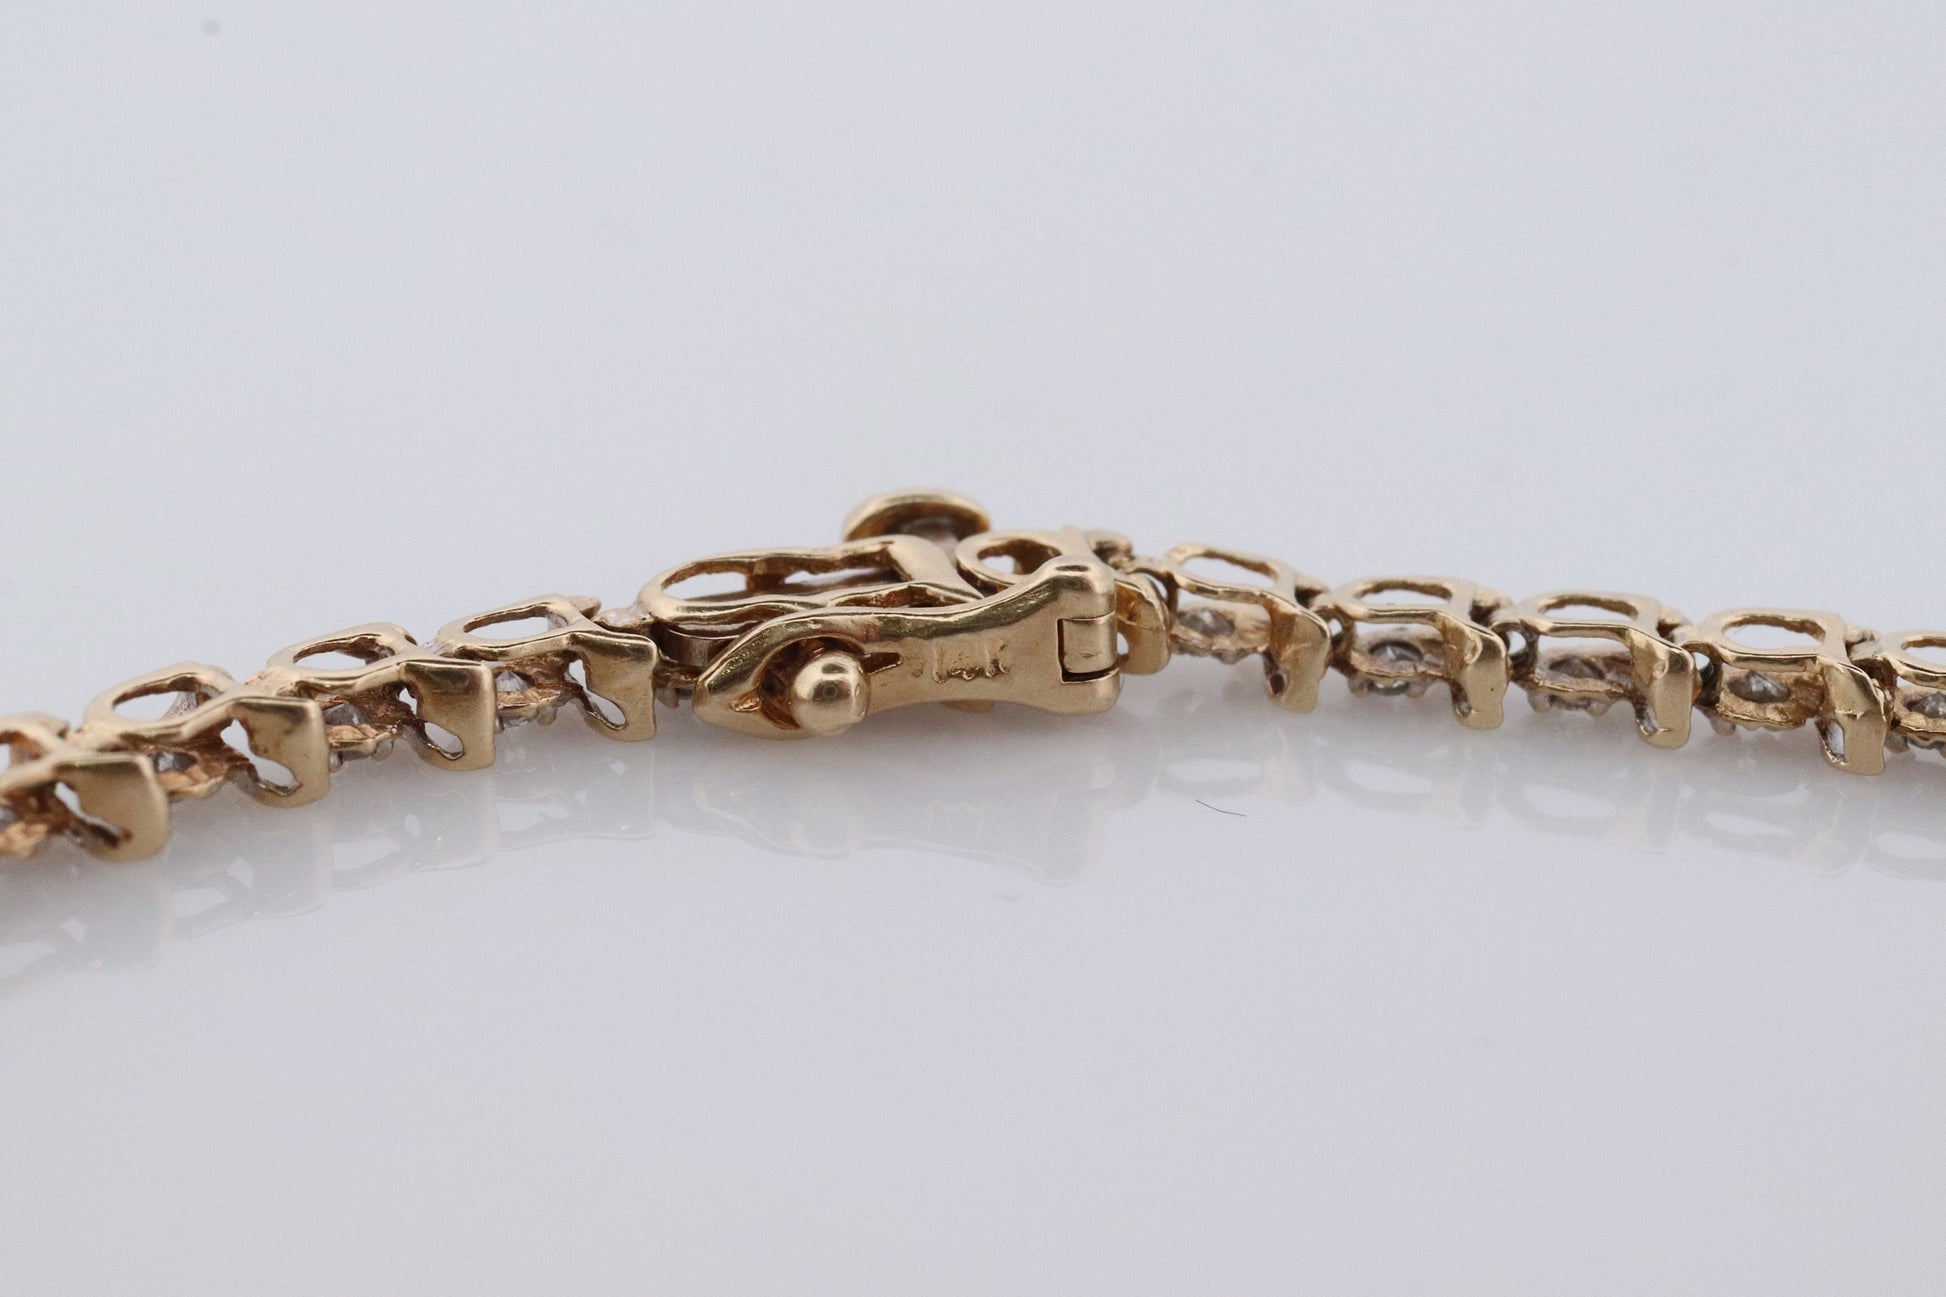 14k Diamond Tennis Bracelet. 14k S-LINK round diamond Tennis bracelet.